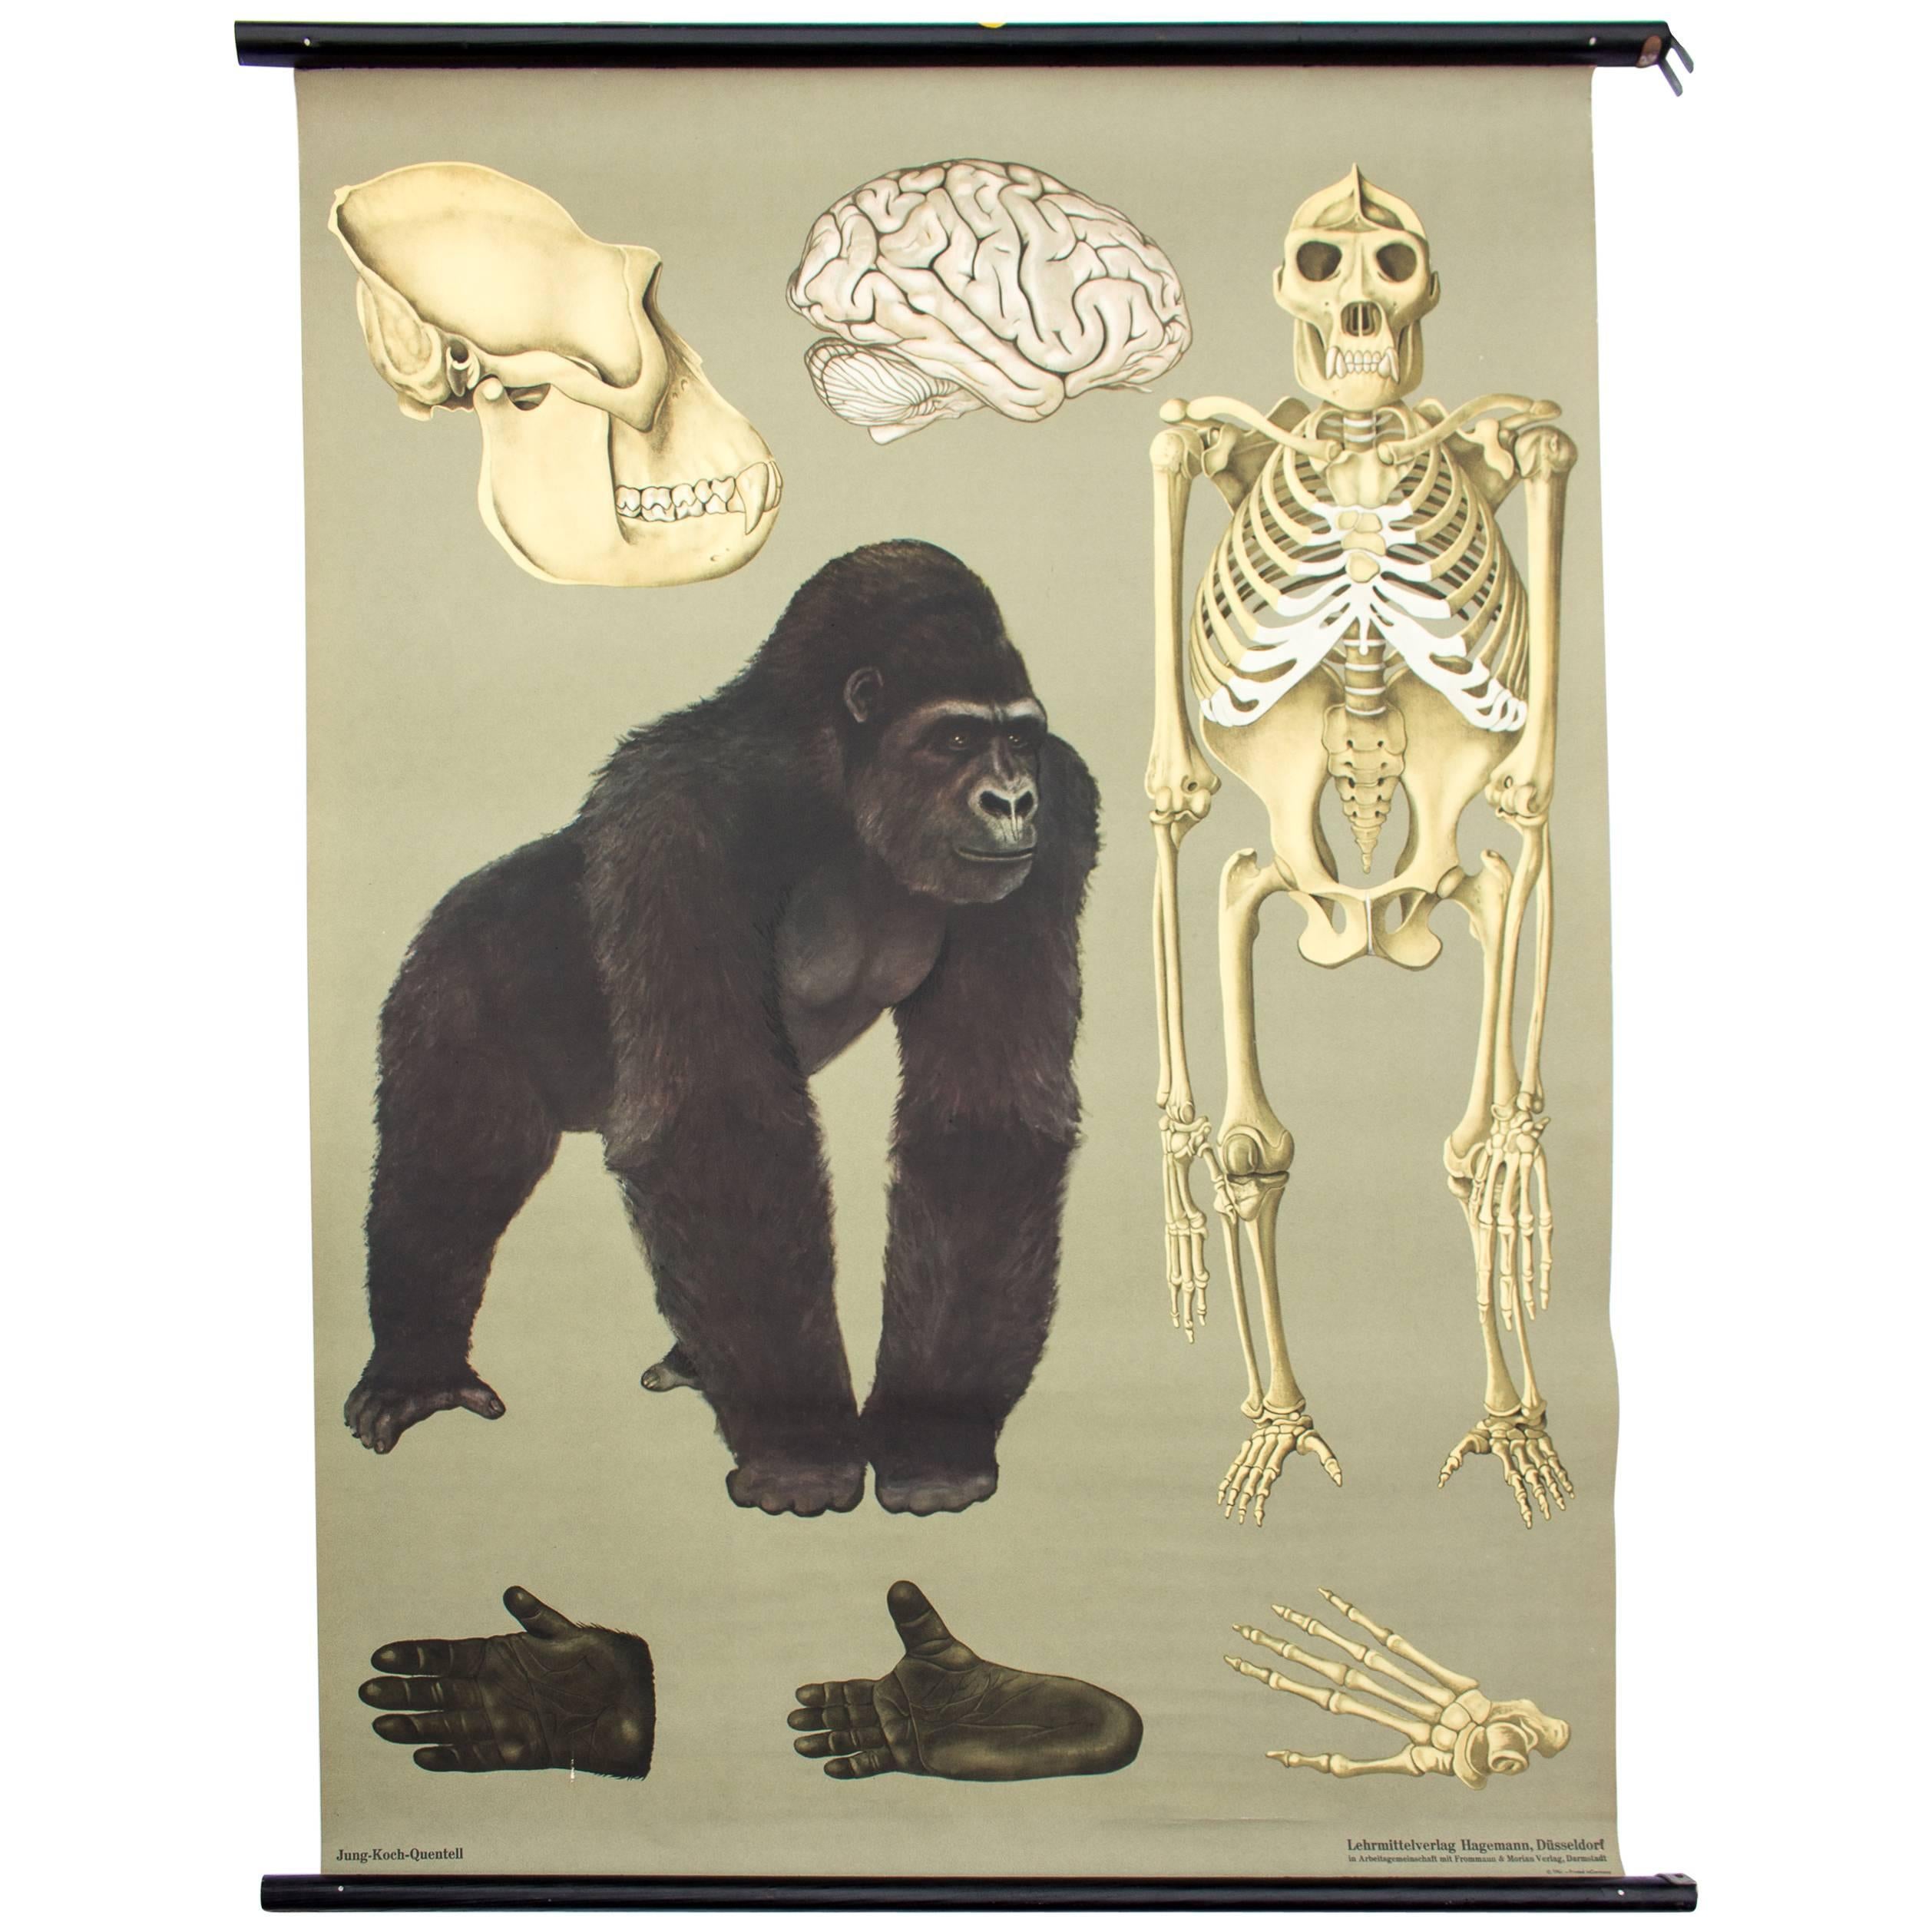 Wall Chart Gorilla from Jung-Koch-Quentell, 1961 For Sale